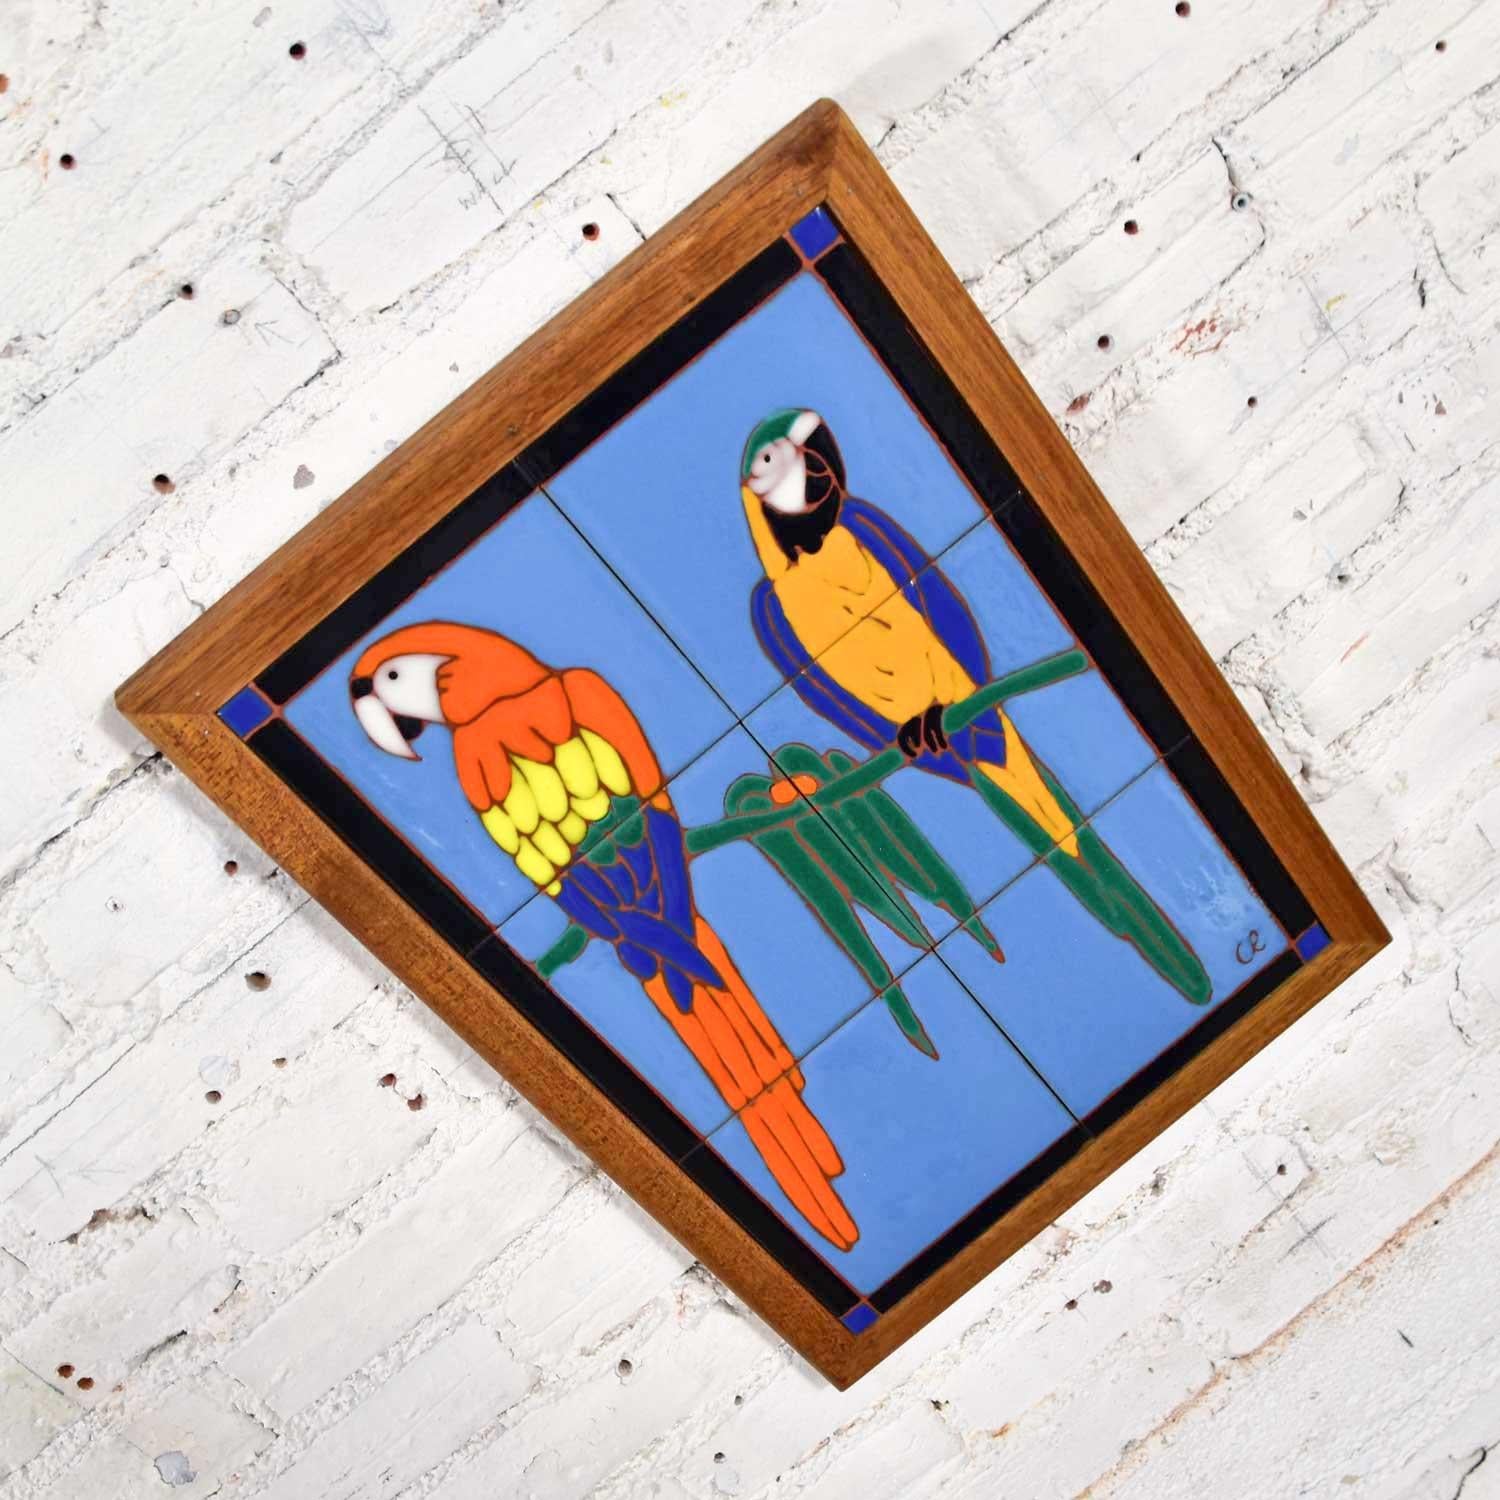 Parrot Ceramic Tile Framed Plaque by Christopher Reutinger Catalina Picture Tile For Sale 6